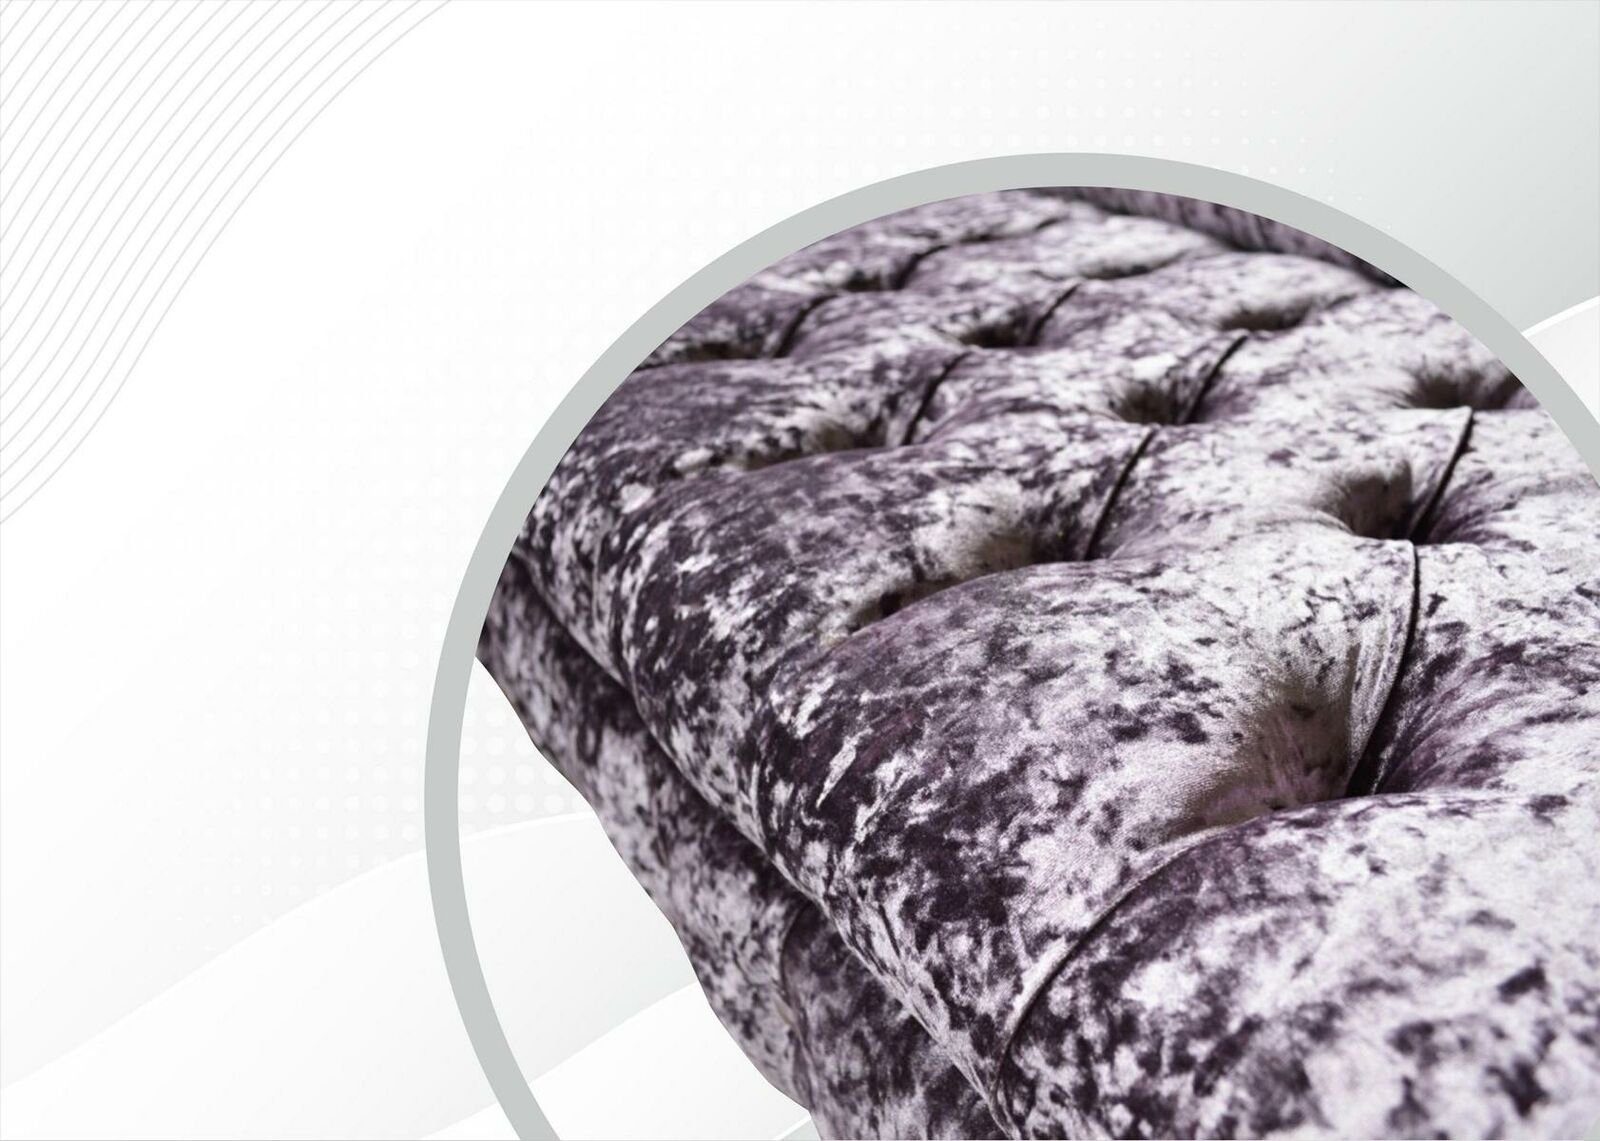 Chesterfield in Sofa Europe Made Chesterfield-Sofa Neu, Moderne luxus Violettes 3-Sitzer JVmoebel